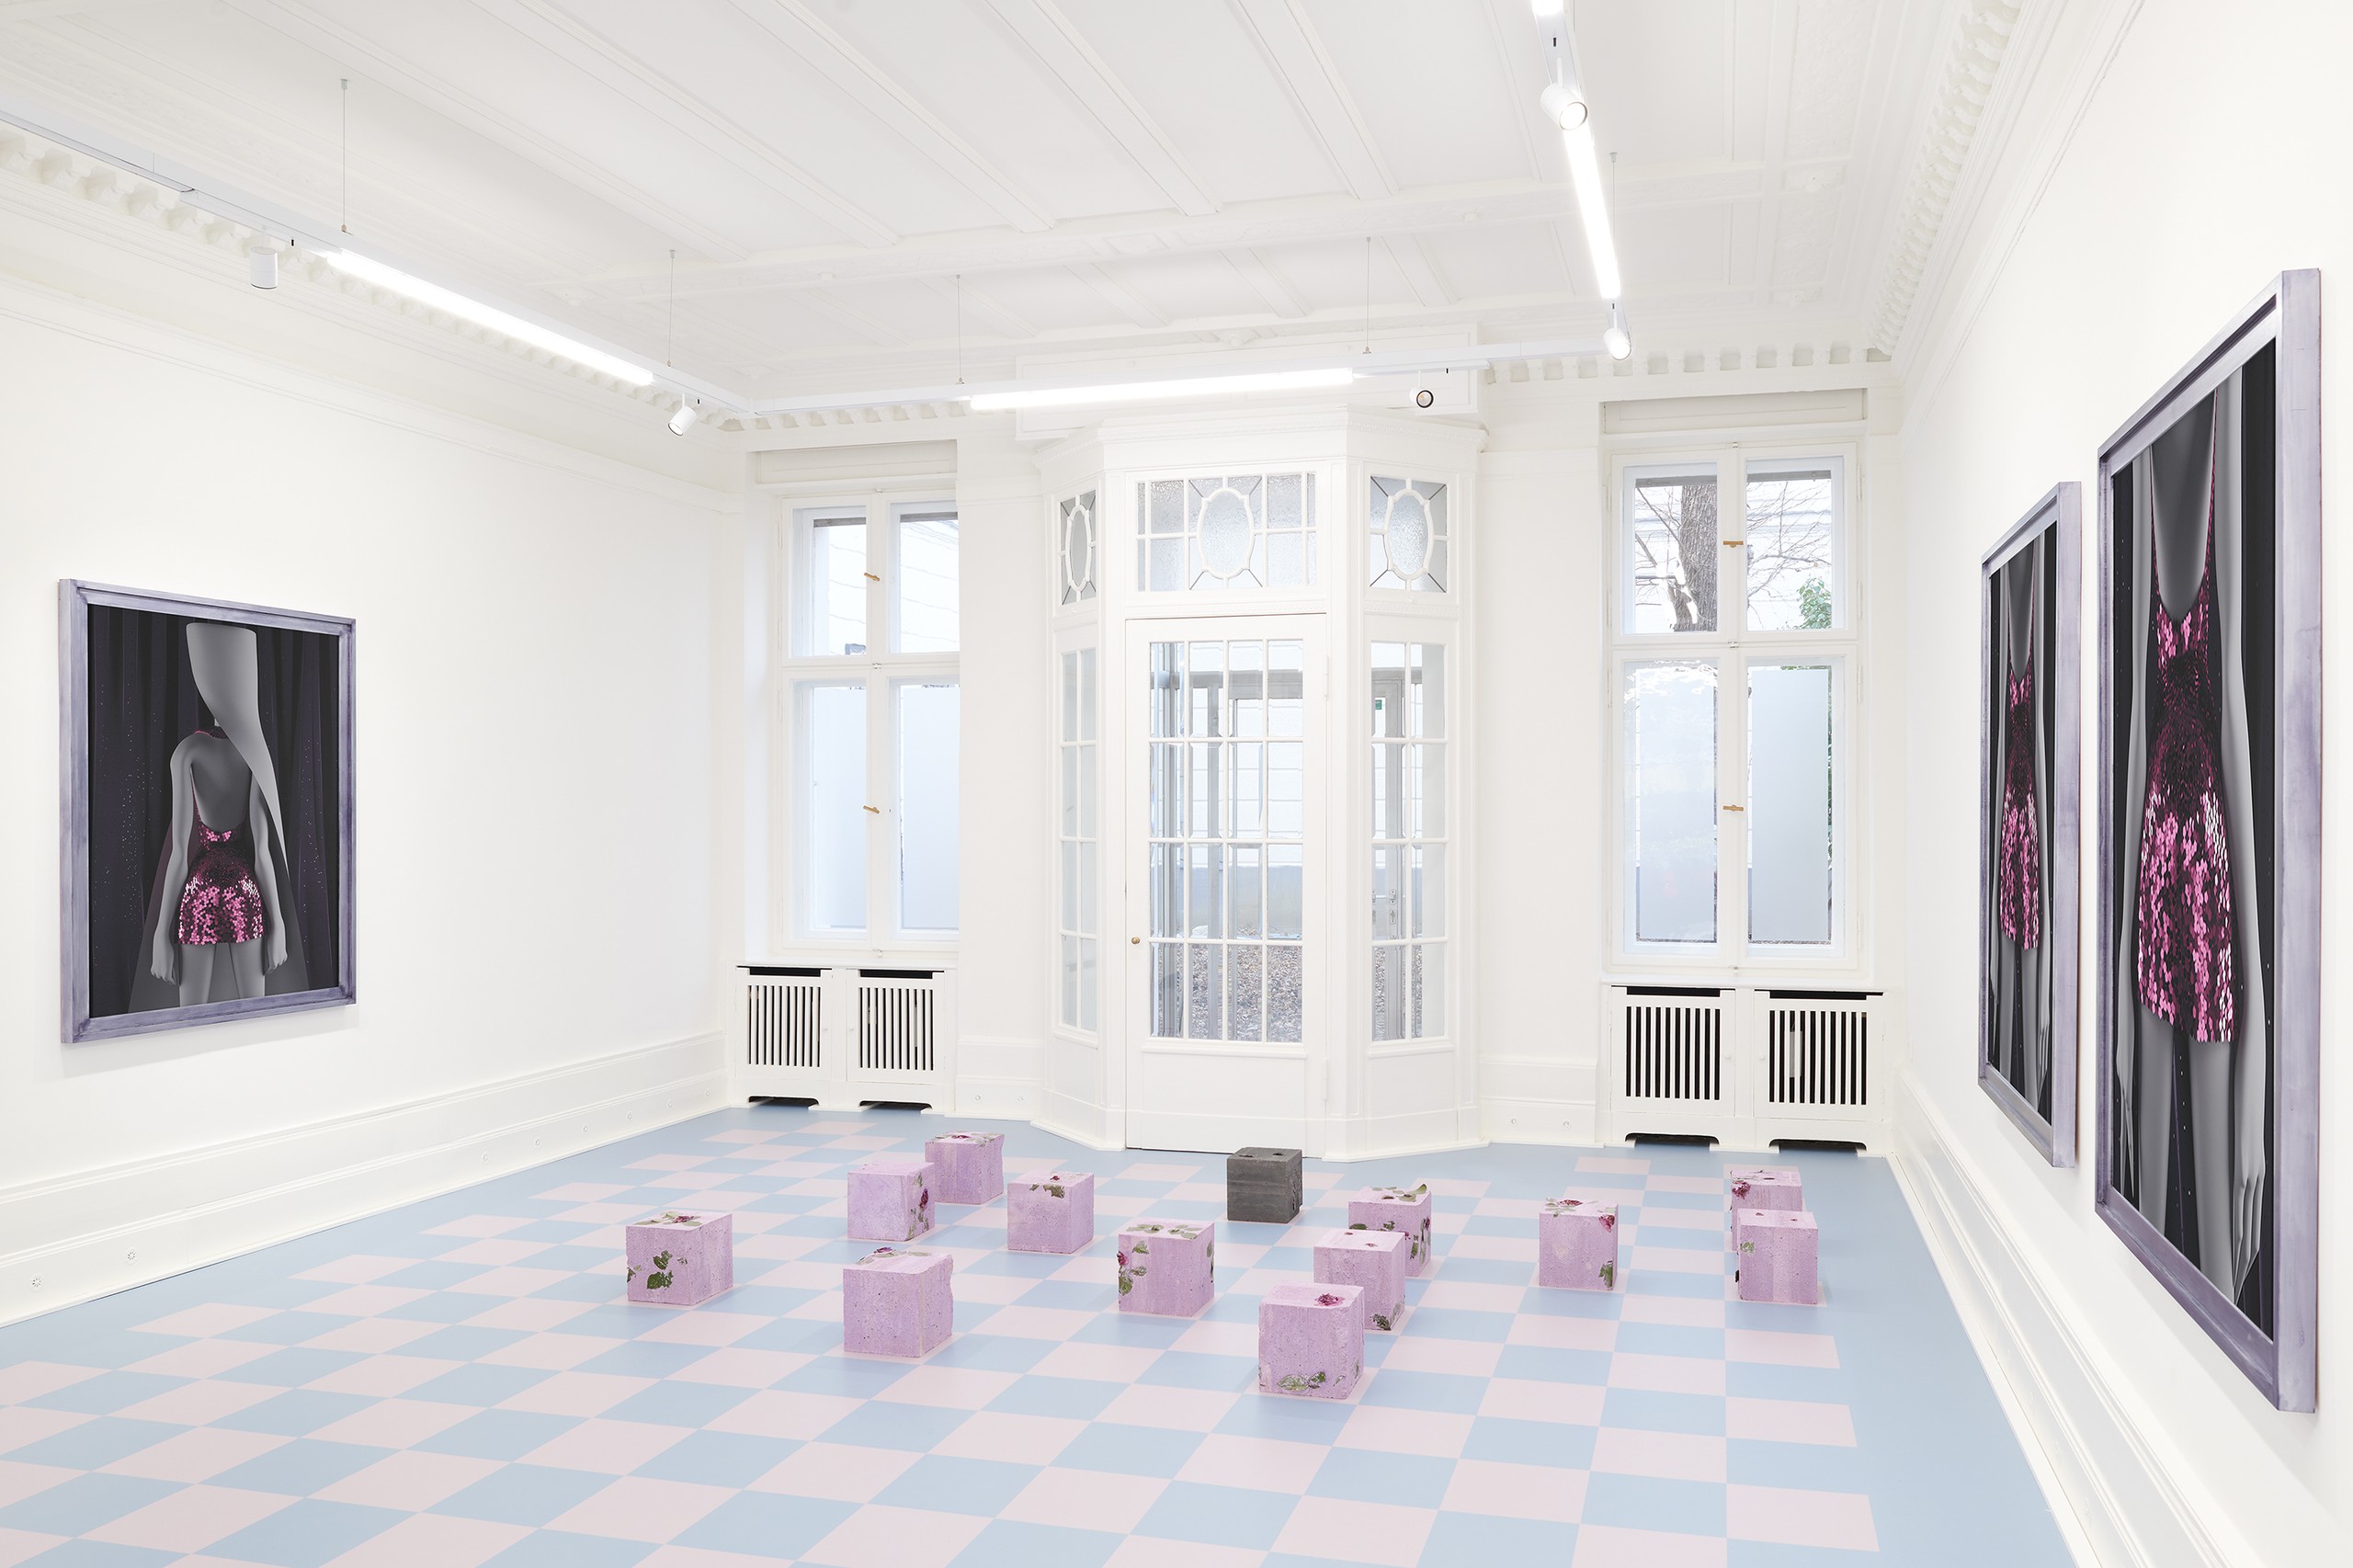 Installation view, Ms Agony, Société, Berlin, 2020/21